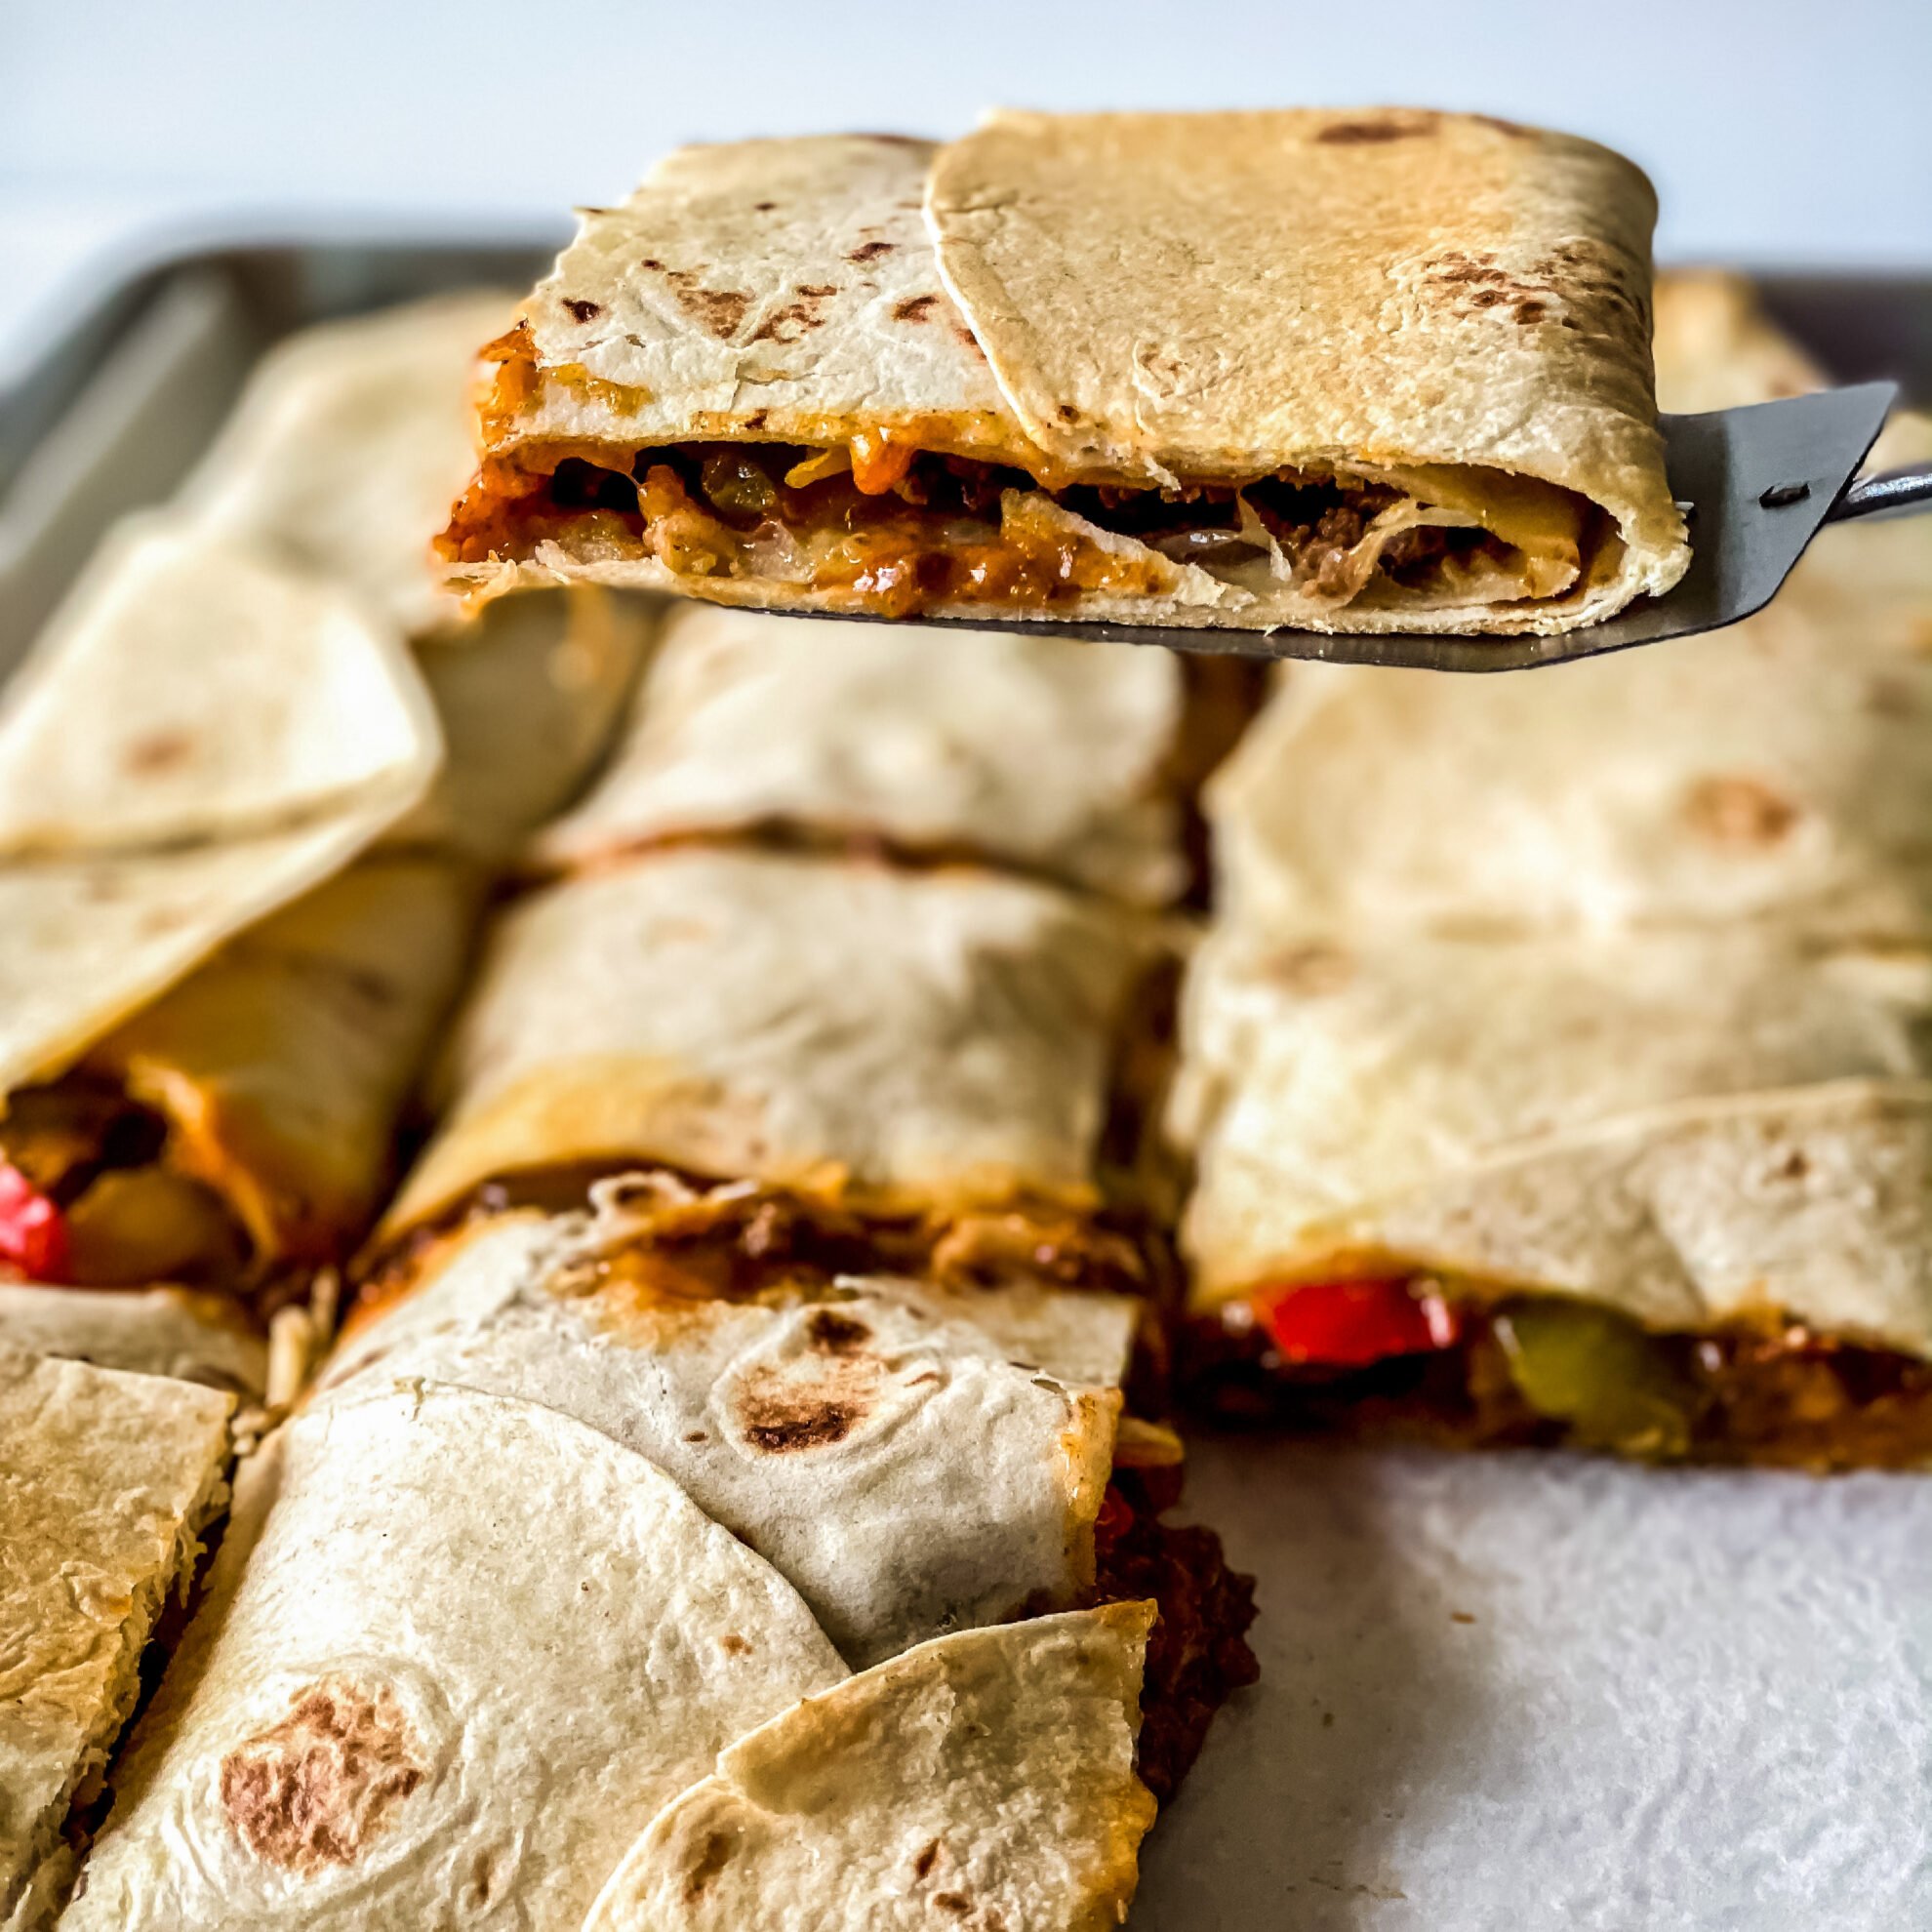 Easy Sheet Pan Quesadillas Recipe - Delicious Family Dinner